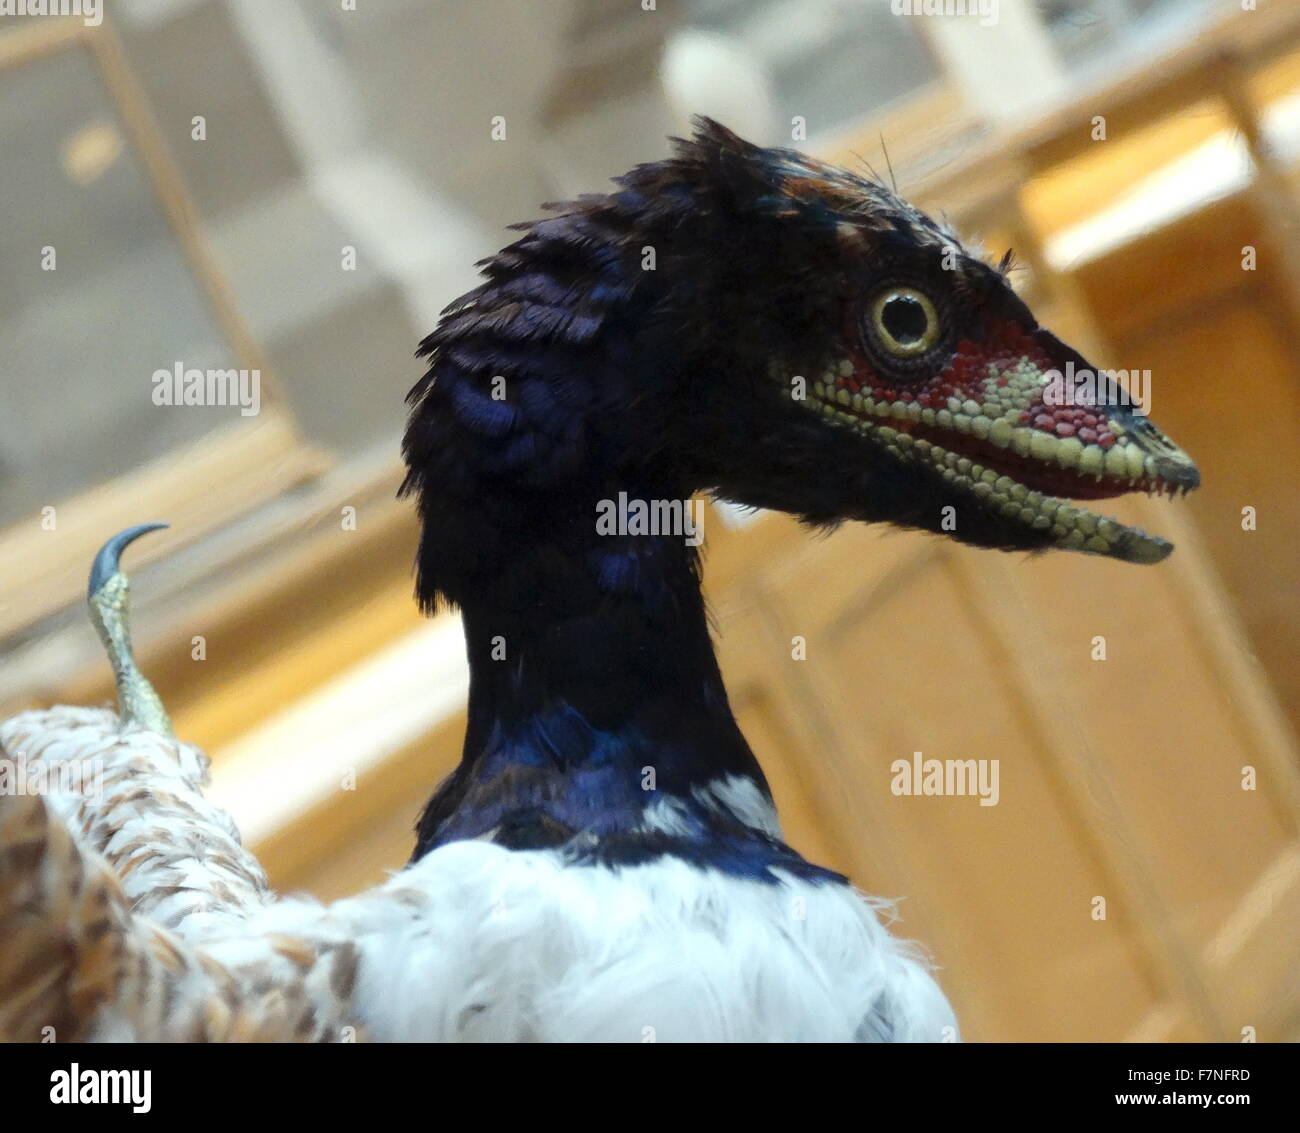 Dinosaurios no avianos fotografías e imágenes de alta resolución - Alamy